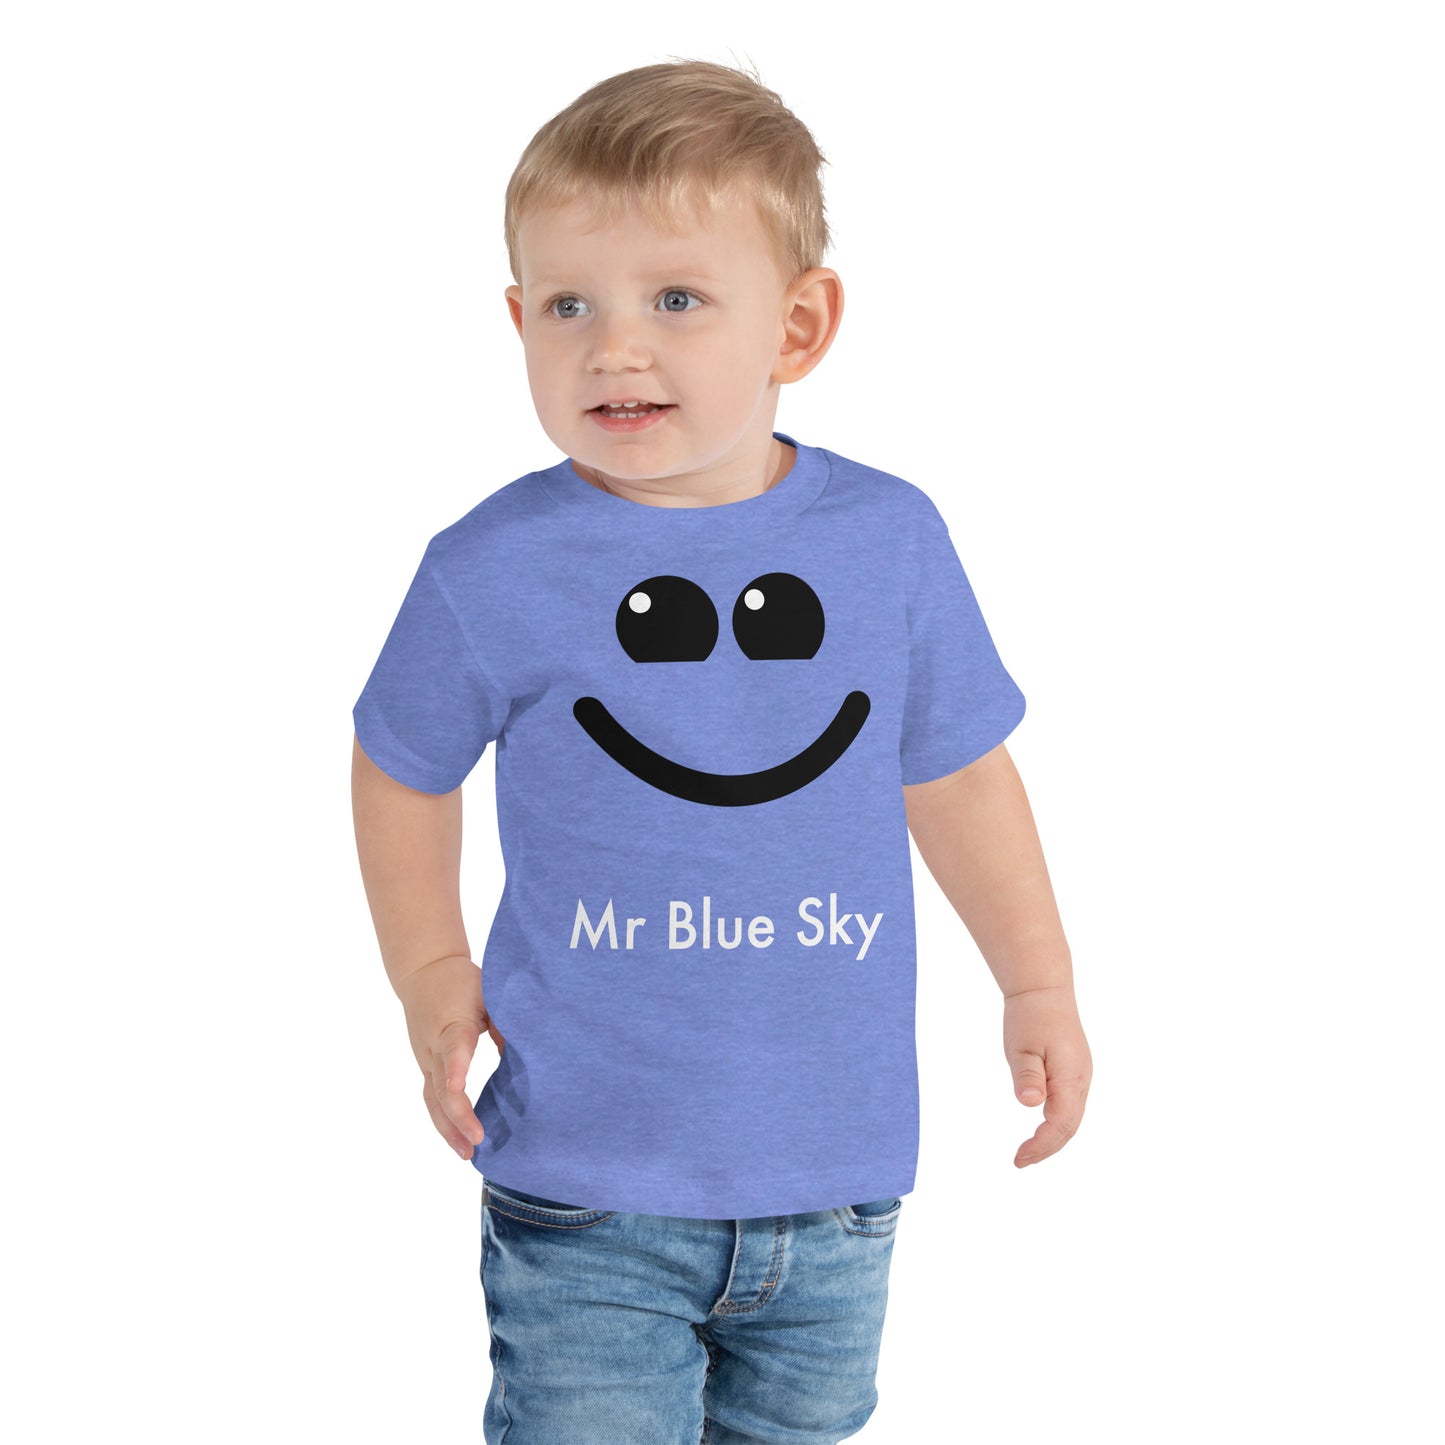 Toddler - Mr Blue Sky - Short Sleeve Tee